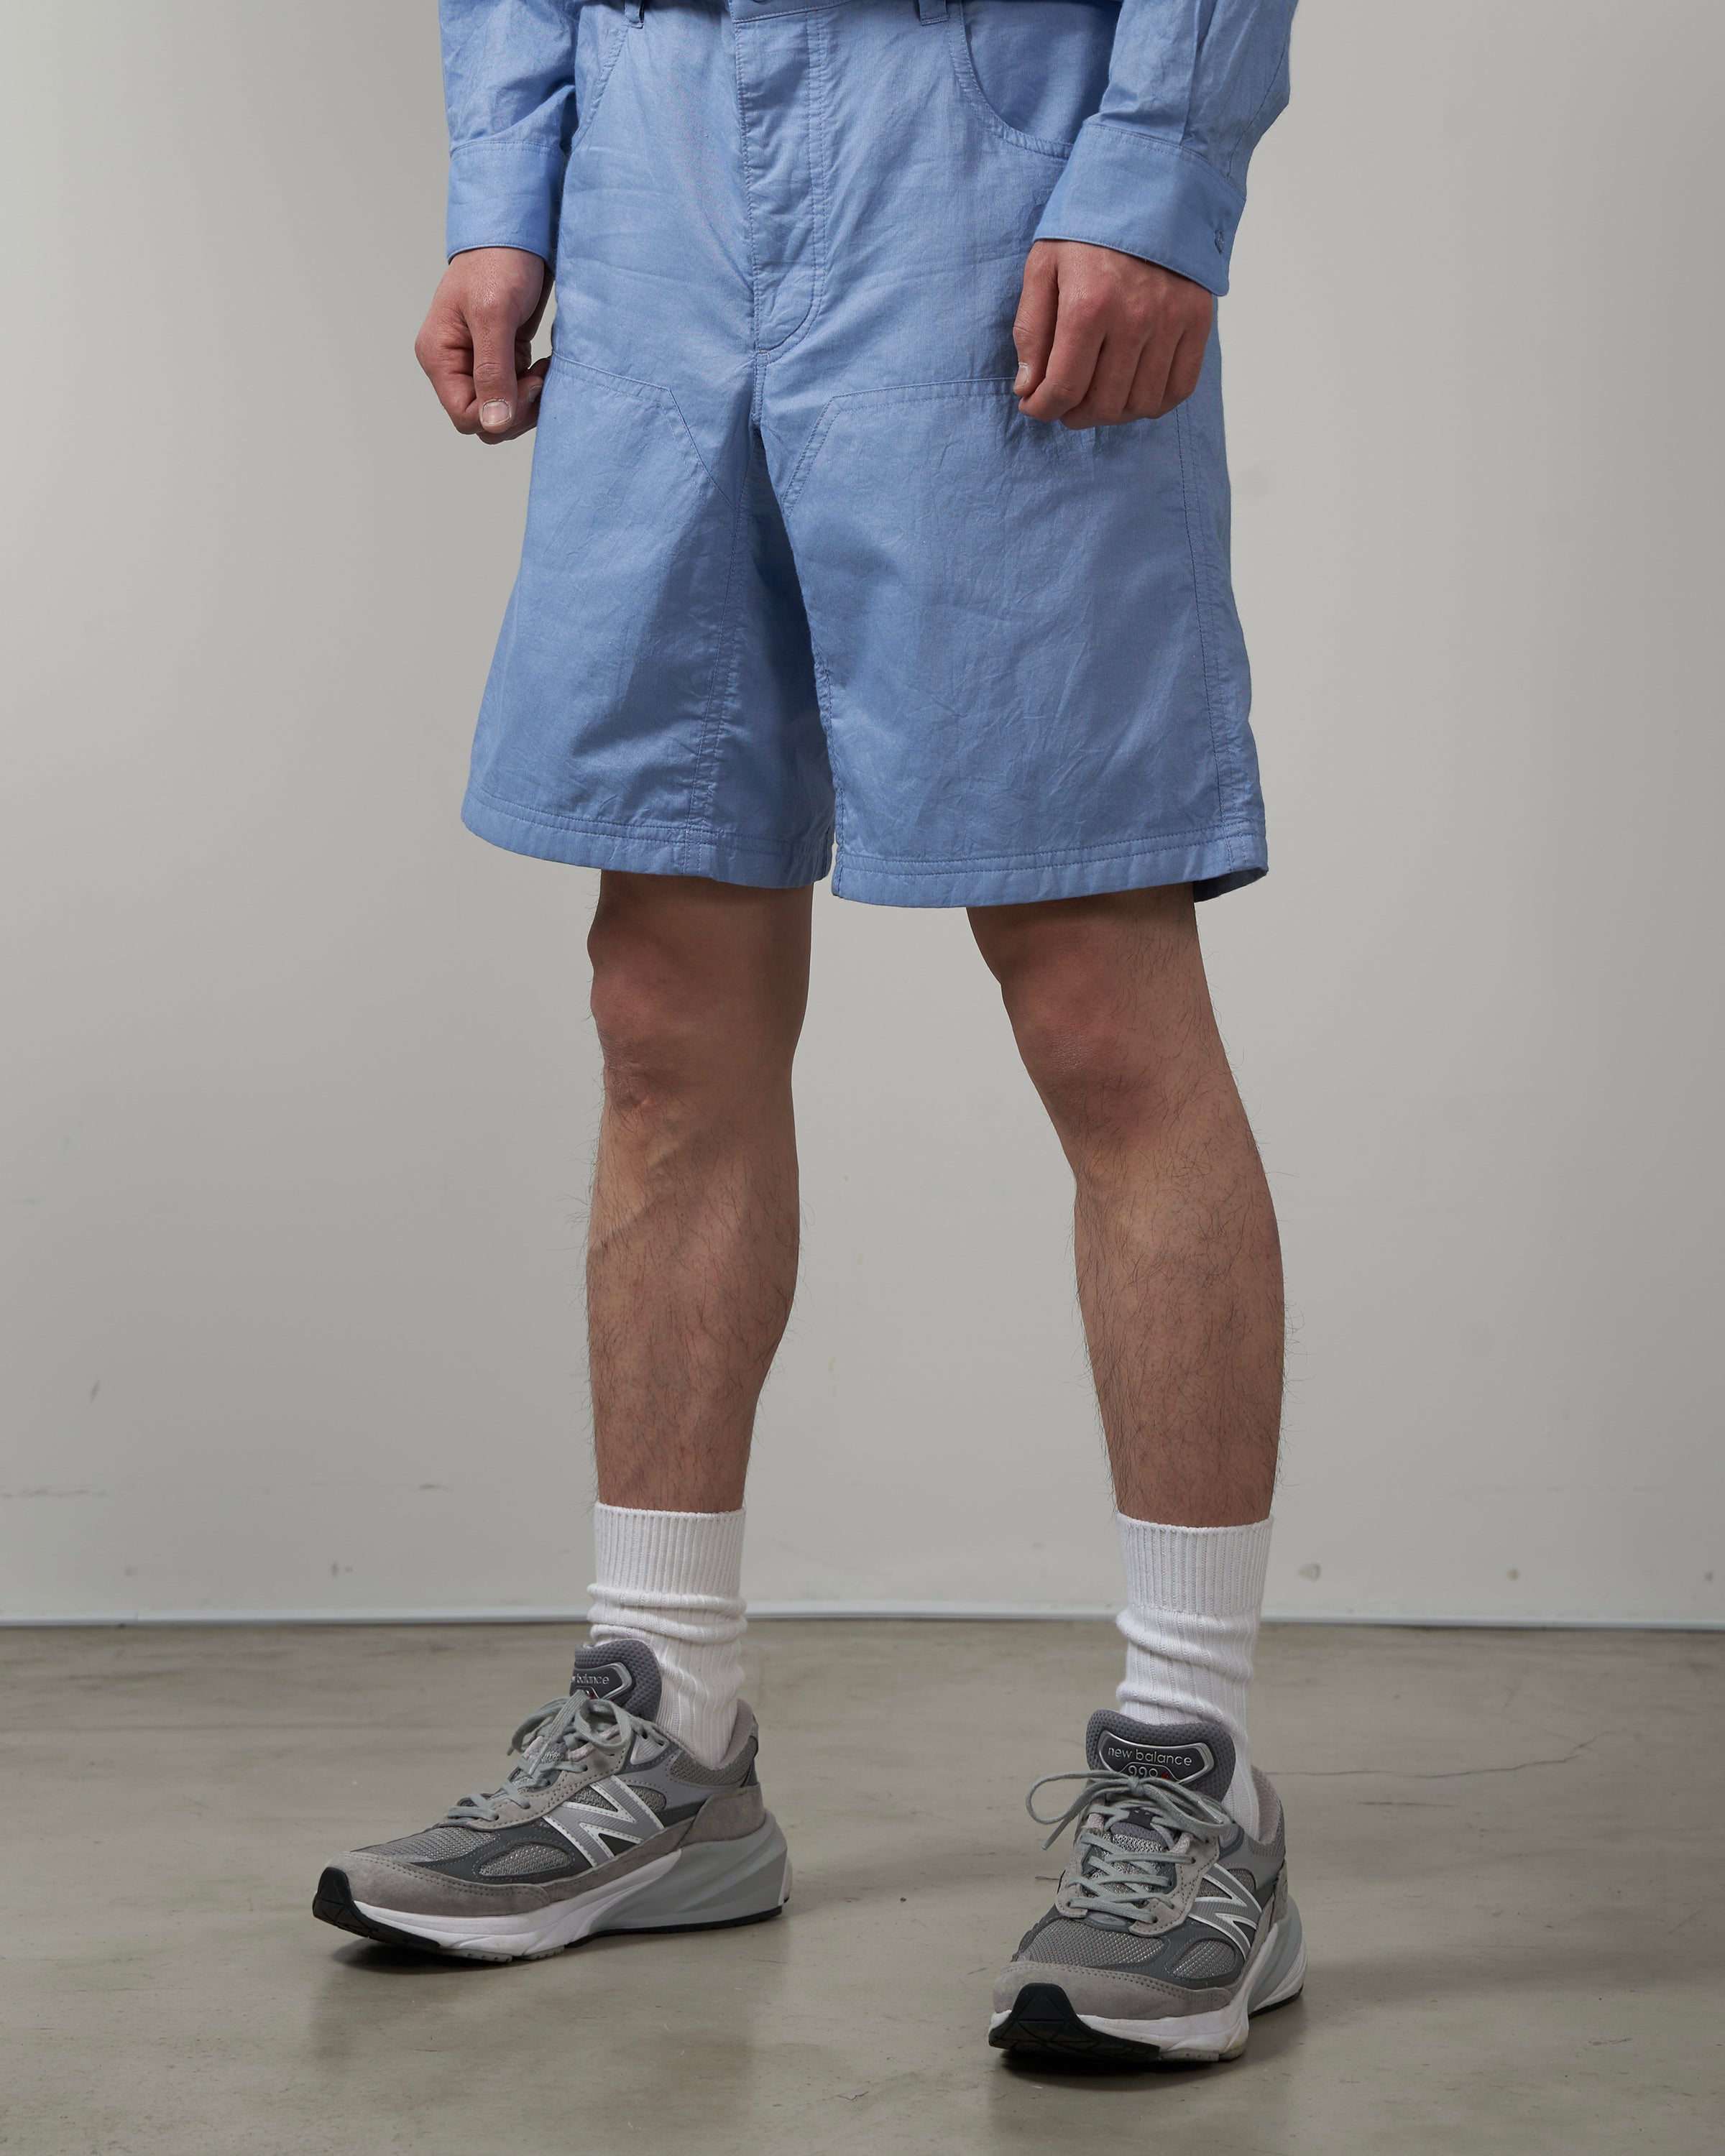 S H DKNS-003 Double Knee Shorts, Blue